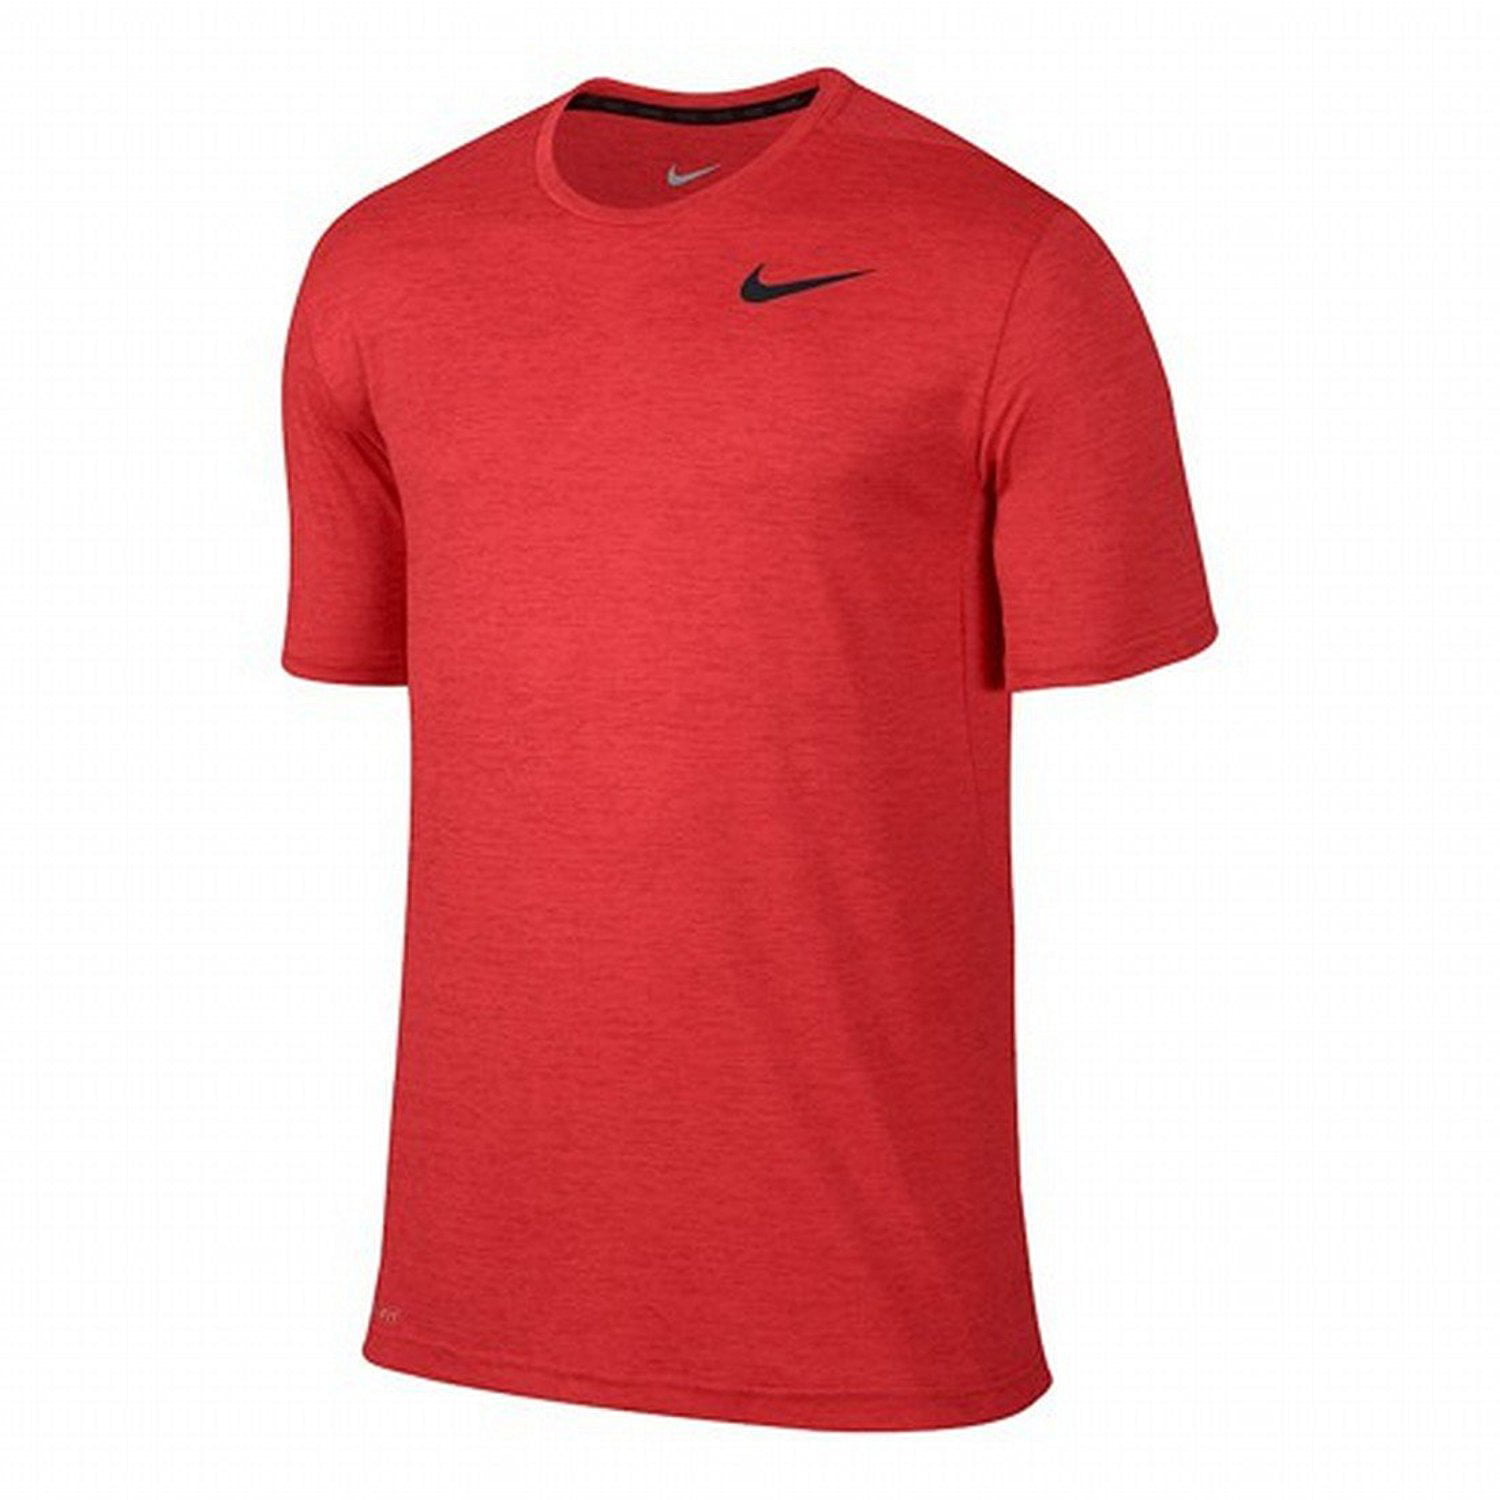 Nike Nike Mens Dri Fit Short Sleeve Training T Shirt Red Large